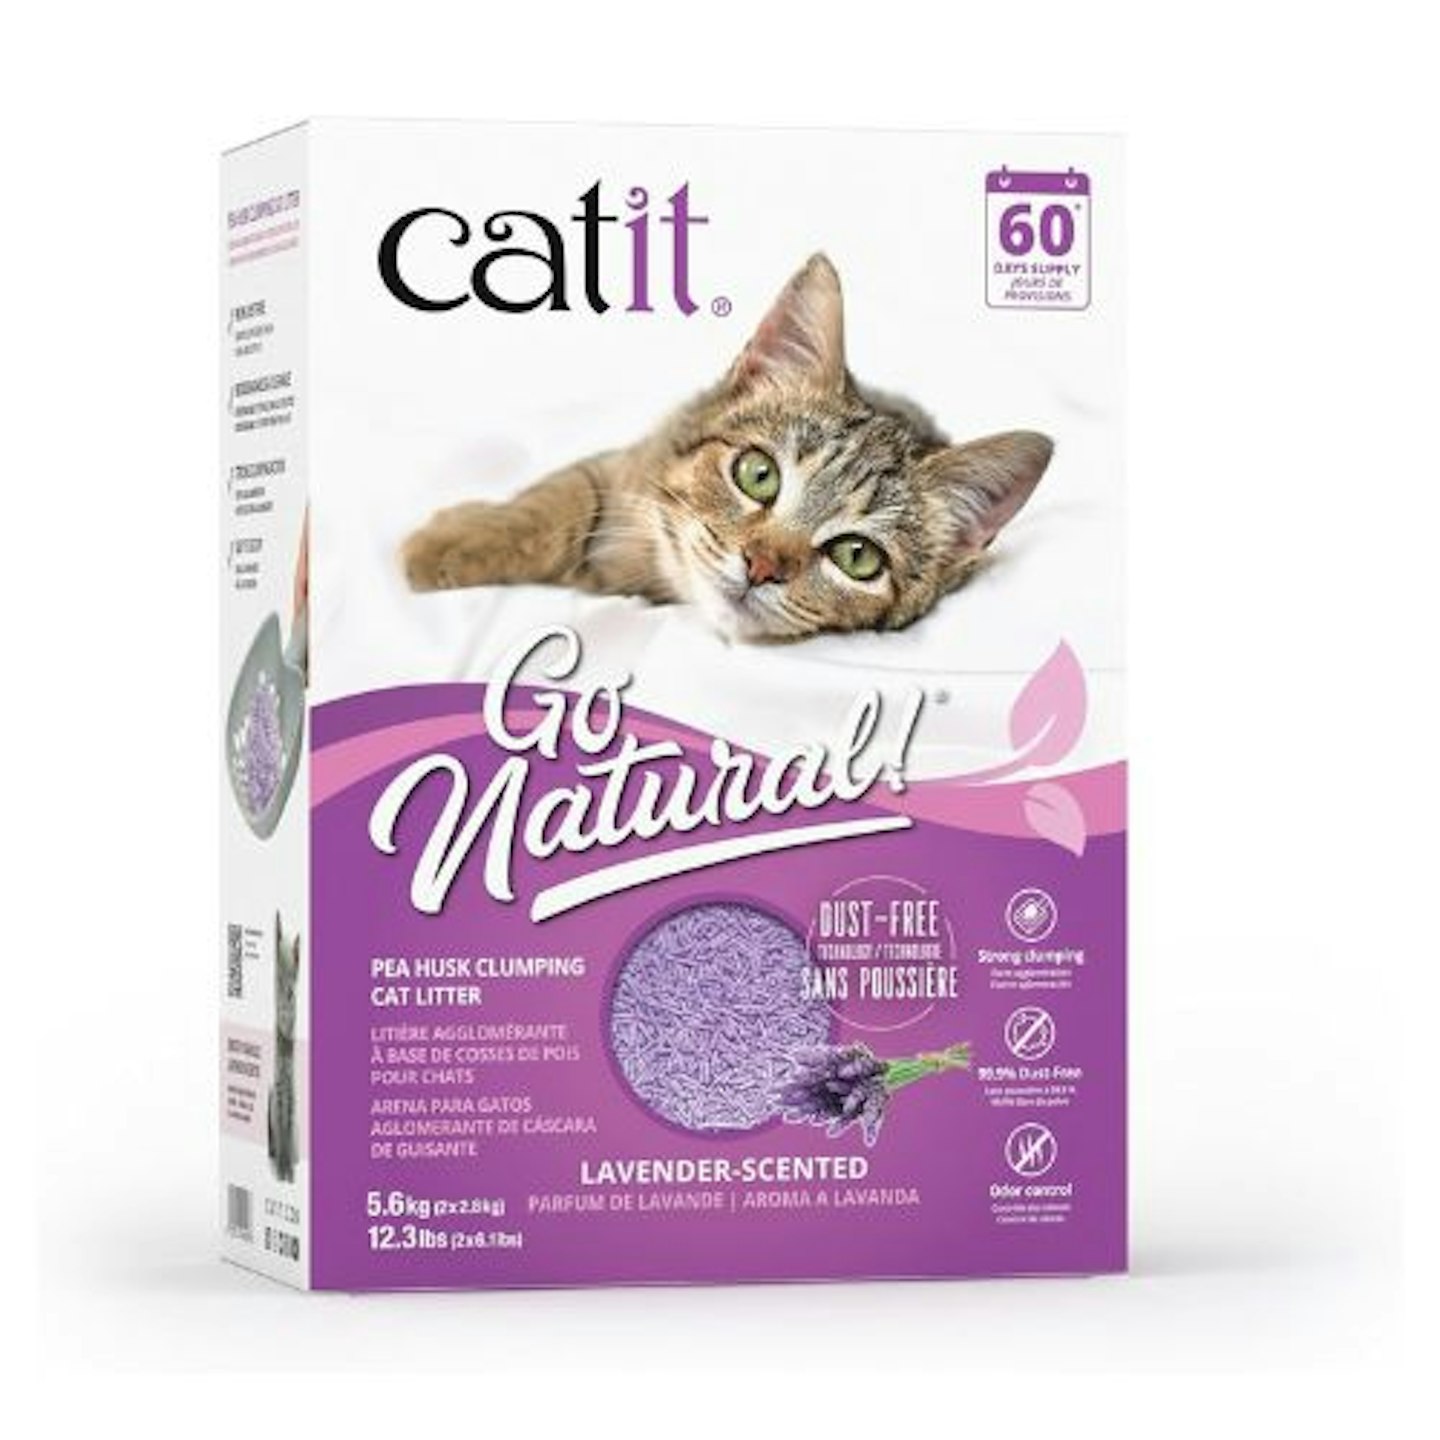 Catit Go Natural! Lavender Clumping Pea Pod Cat Litter, 5.6 kg